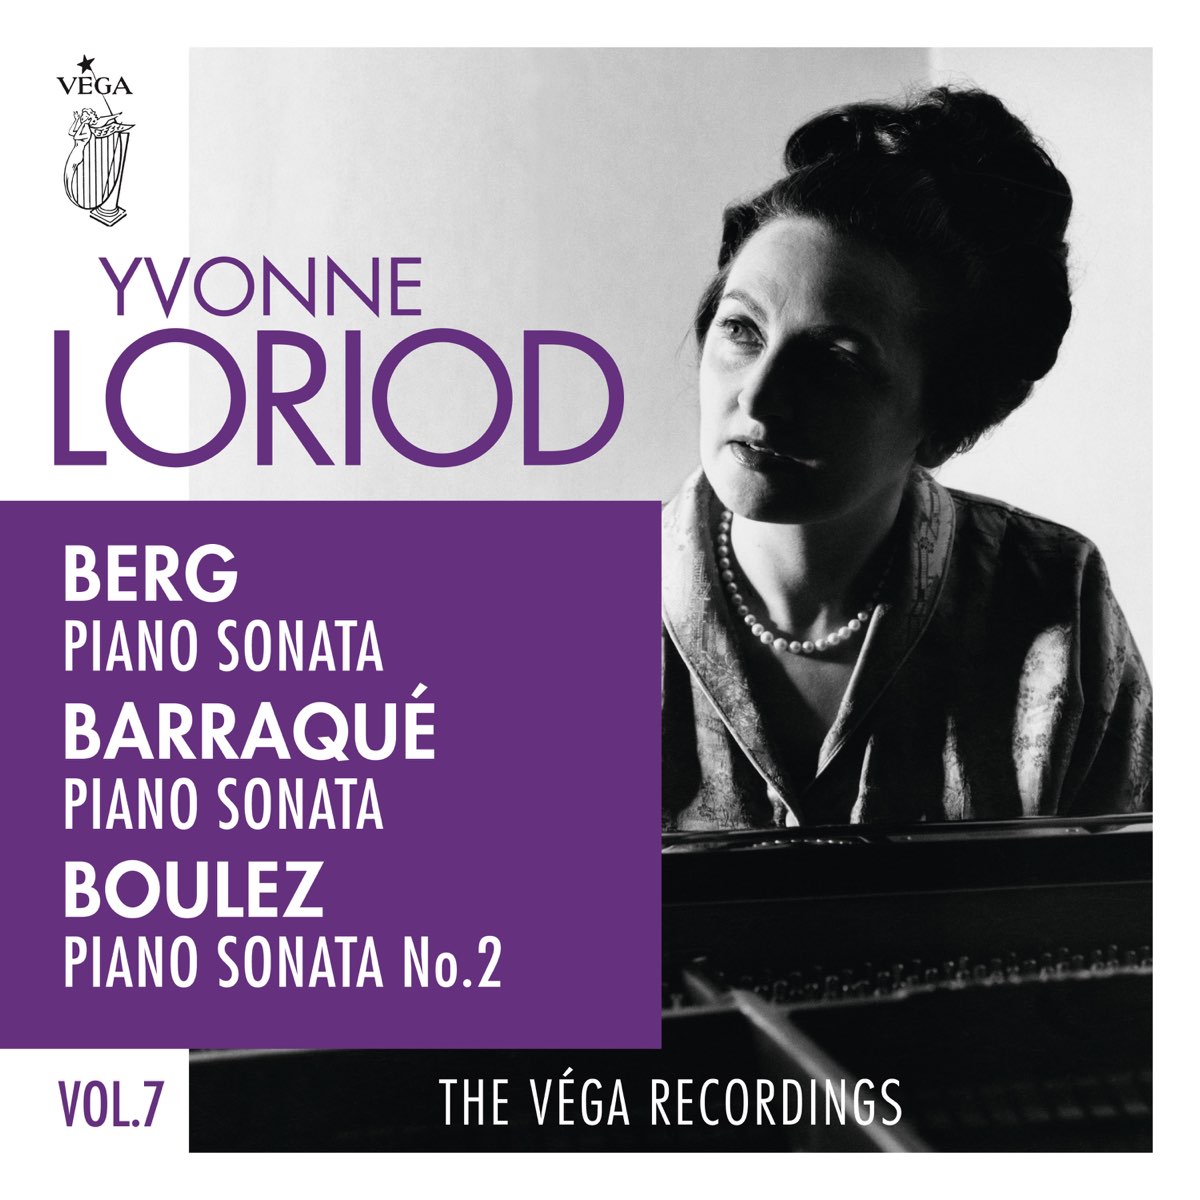 Berg, Barraqué, Boulez: Piano sonatas by Yvonne Loriod on Apple Music